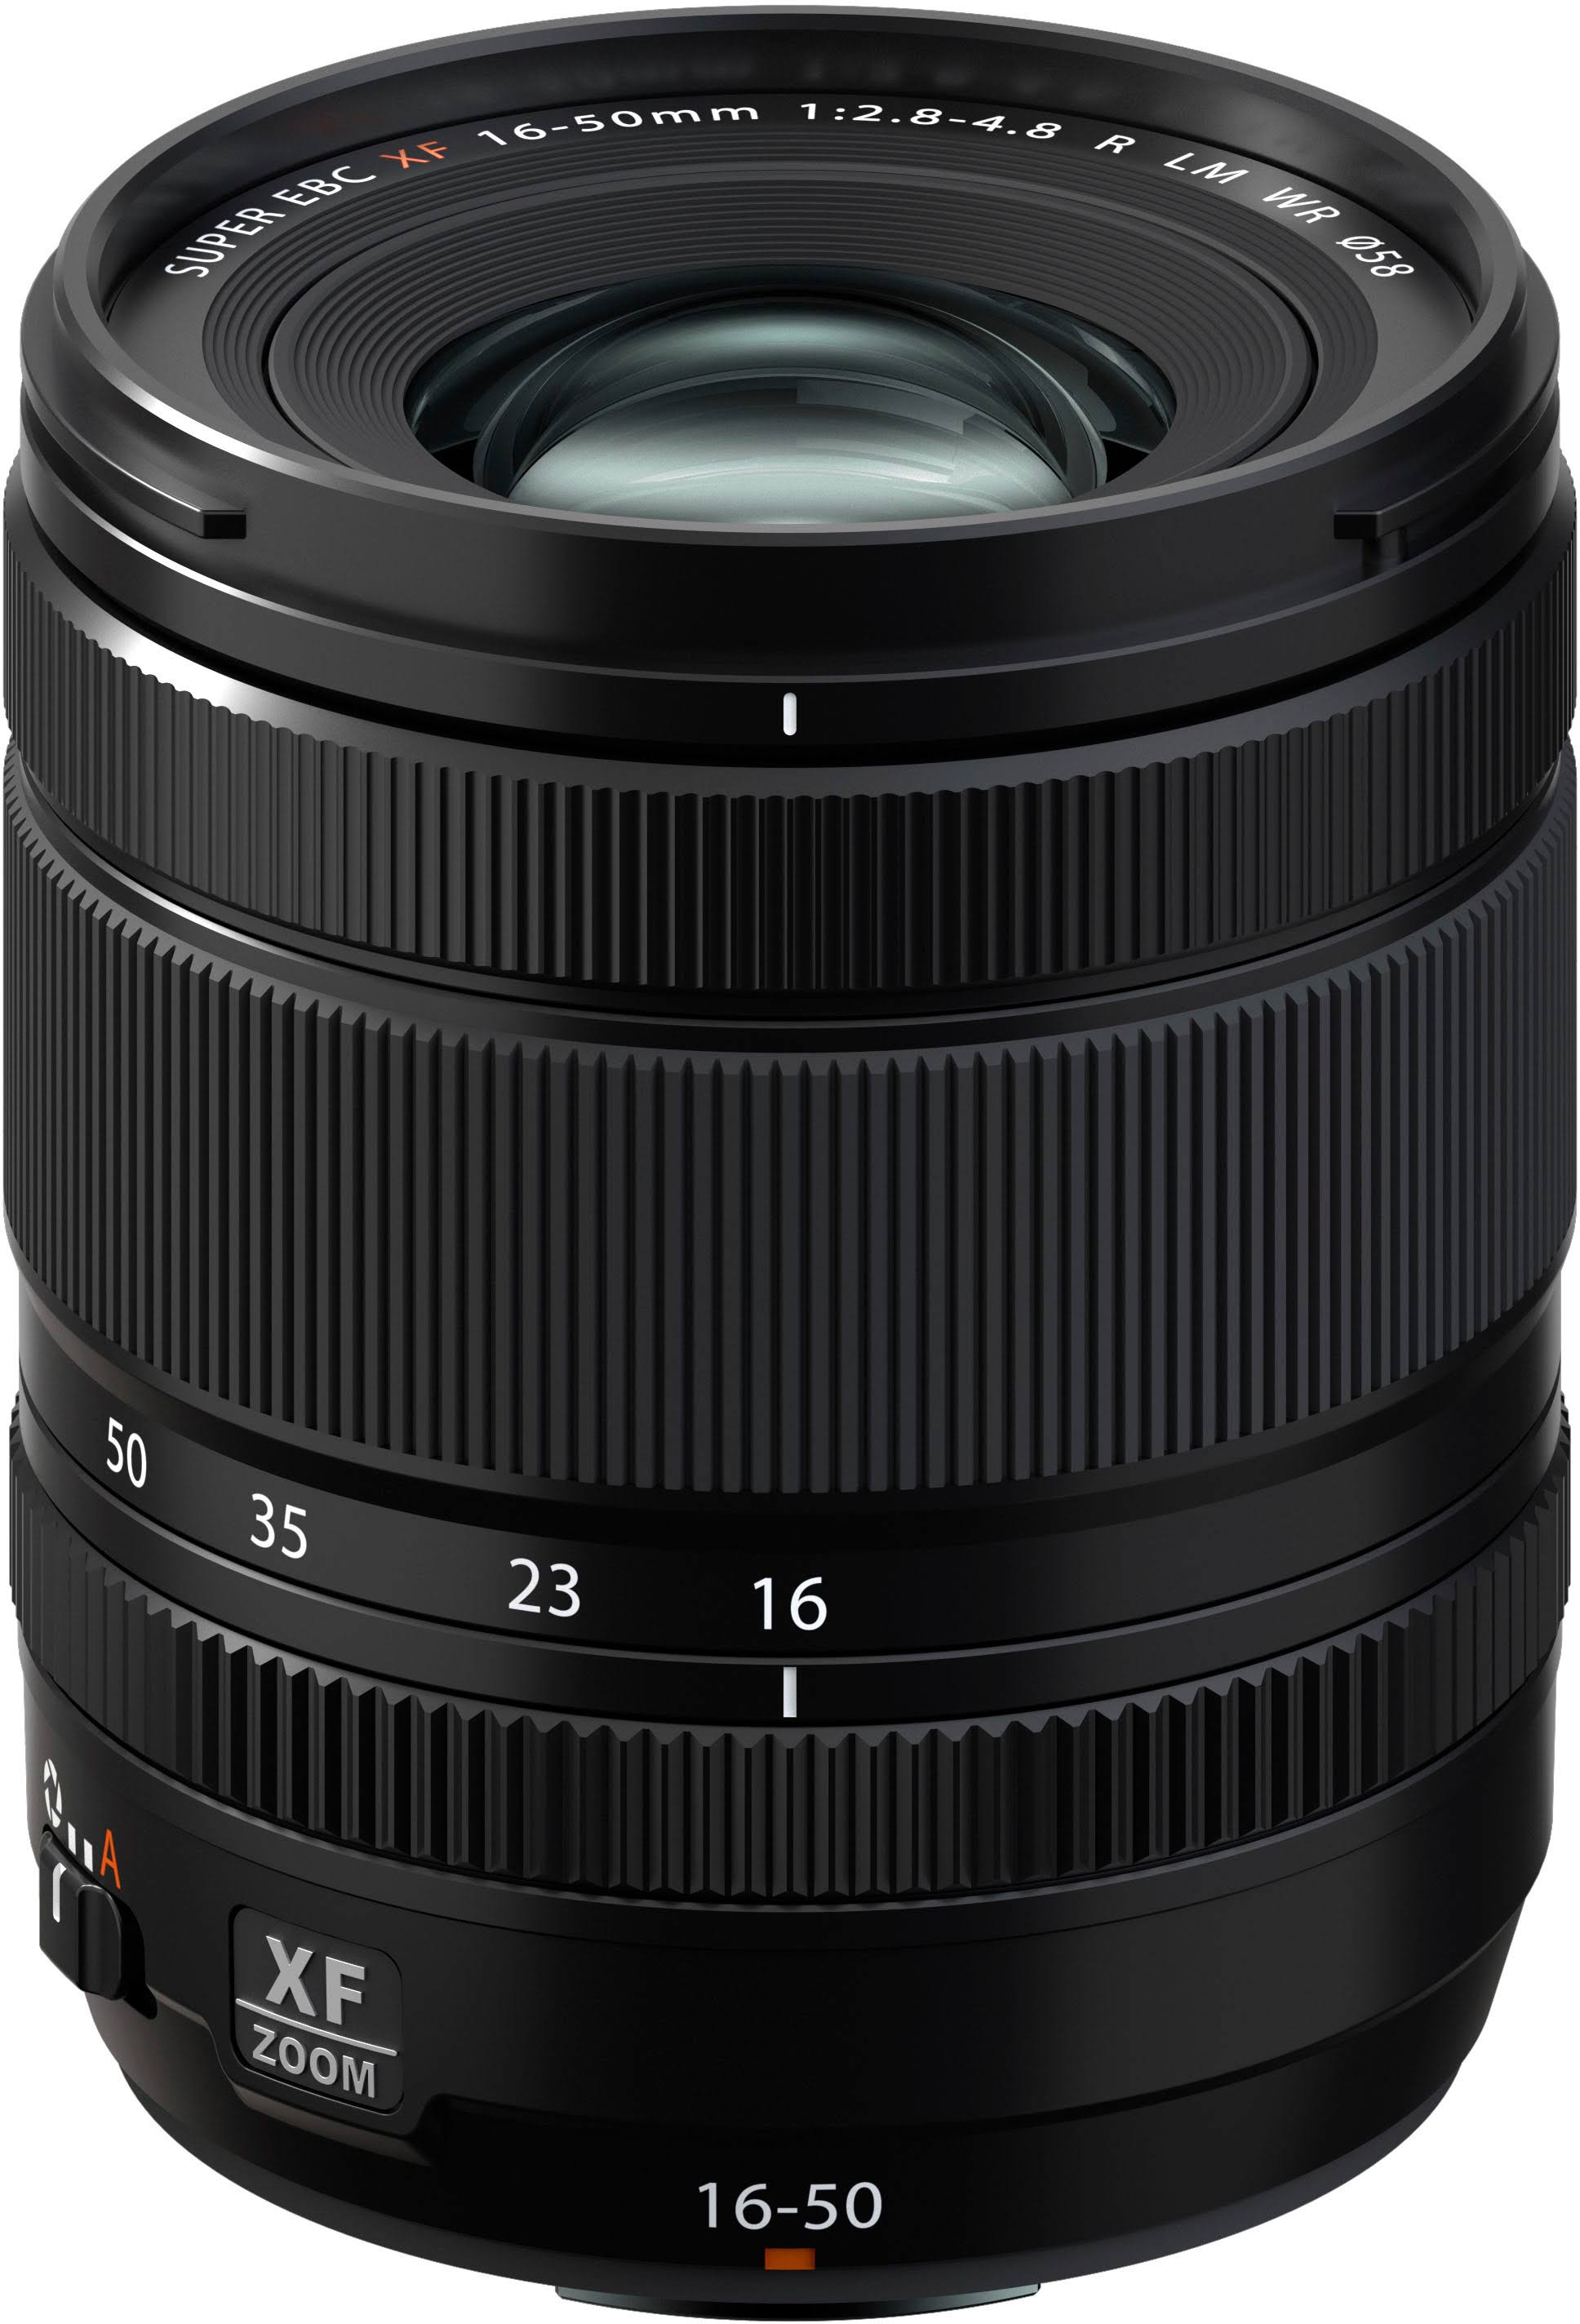 Fujifilm X-S20 Mirrorless Camera with XF 16-50mm f/2.8-4.8 R Lm WR Lens - Black